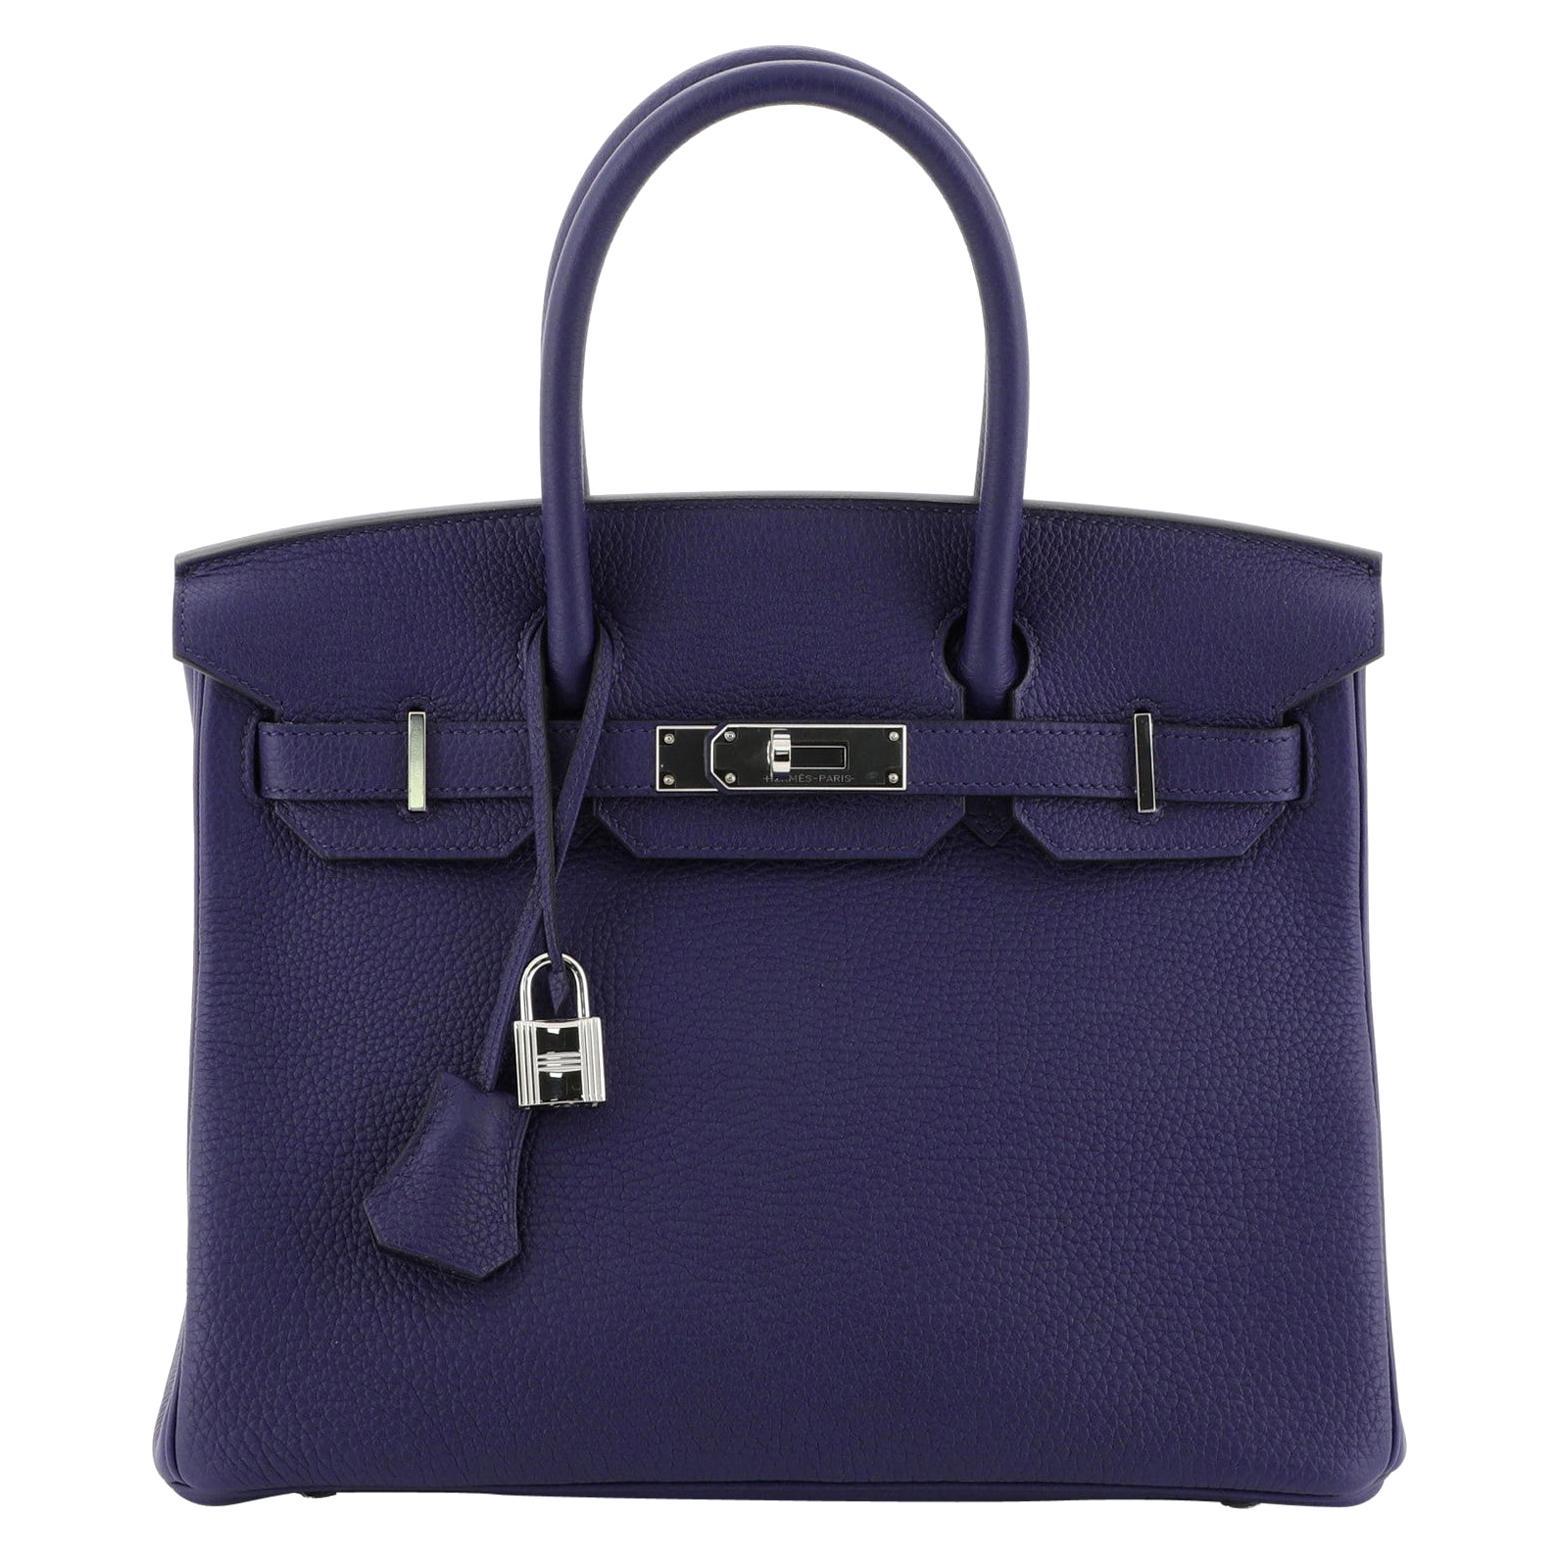 Hermes Birkin Handbag Bleu Encre Togo with Palladium Hardware 30